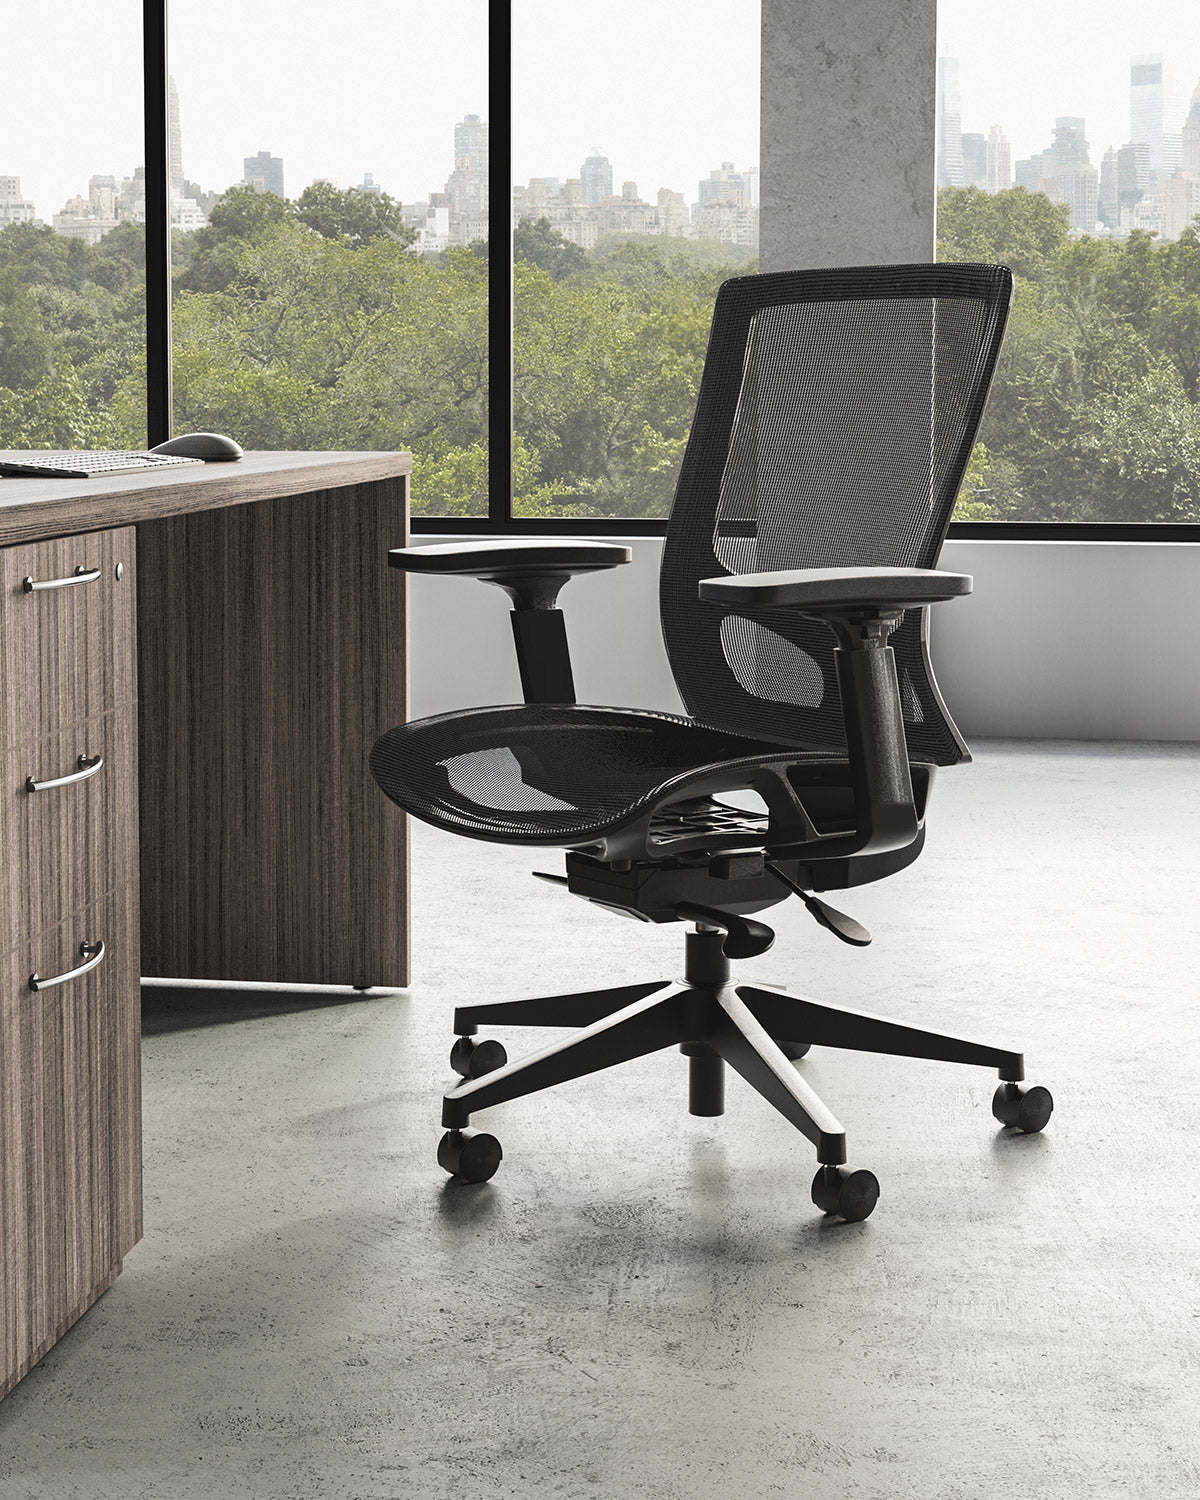 Fierce Chair - Modern Office Chair